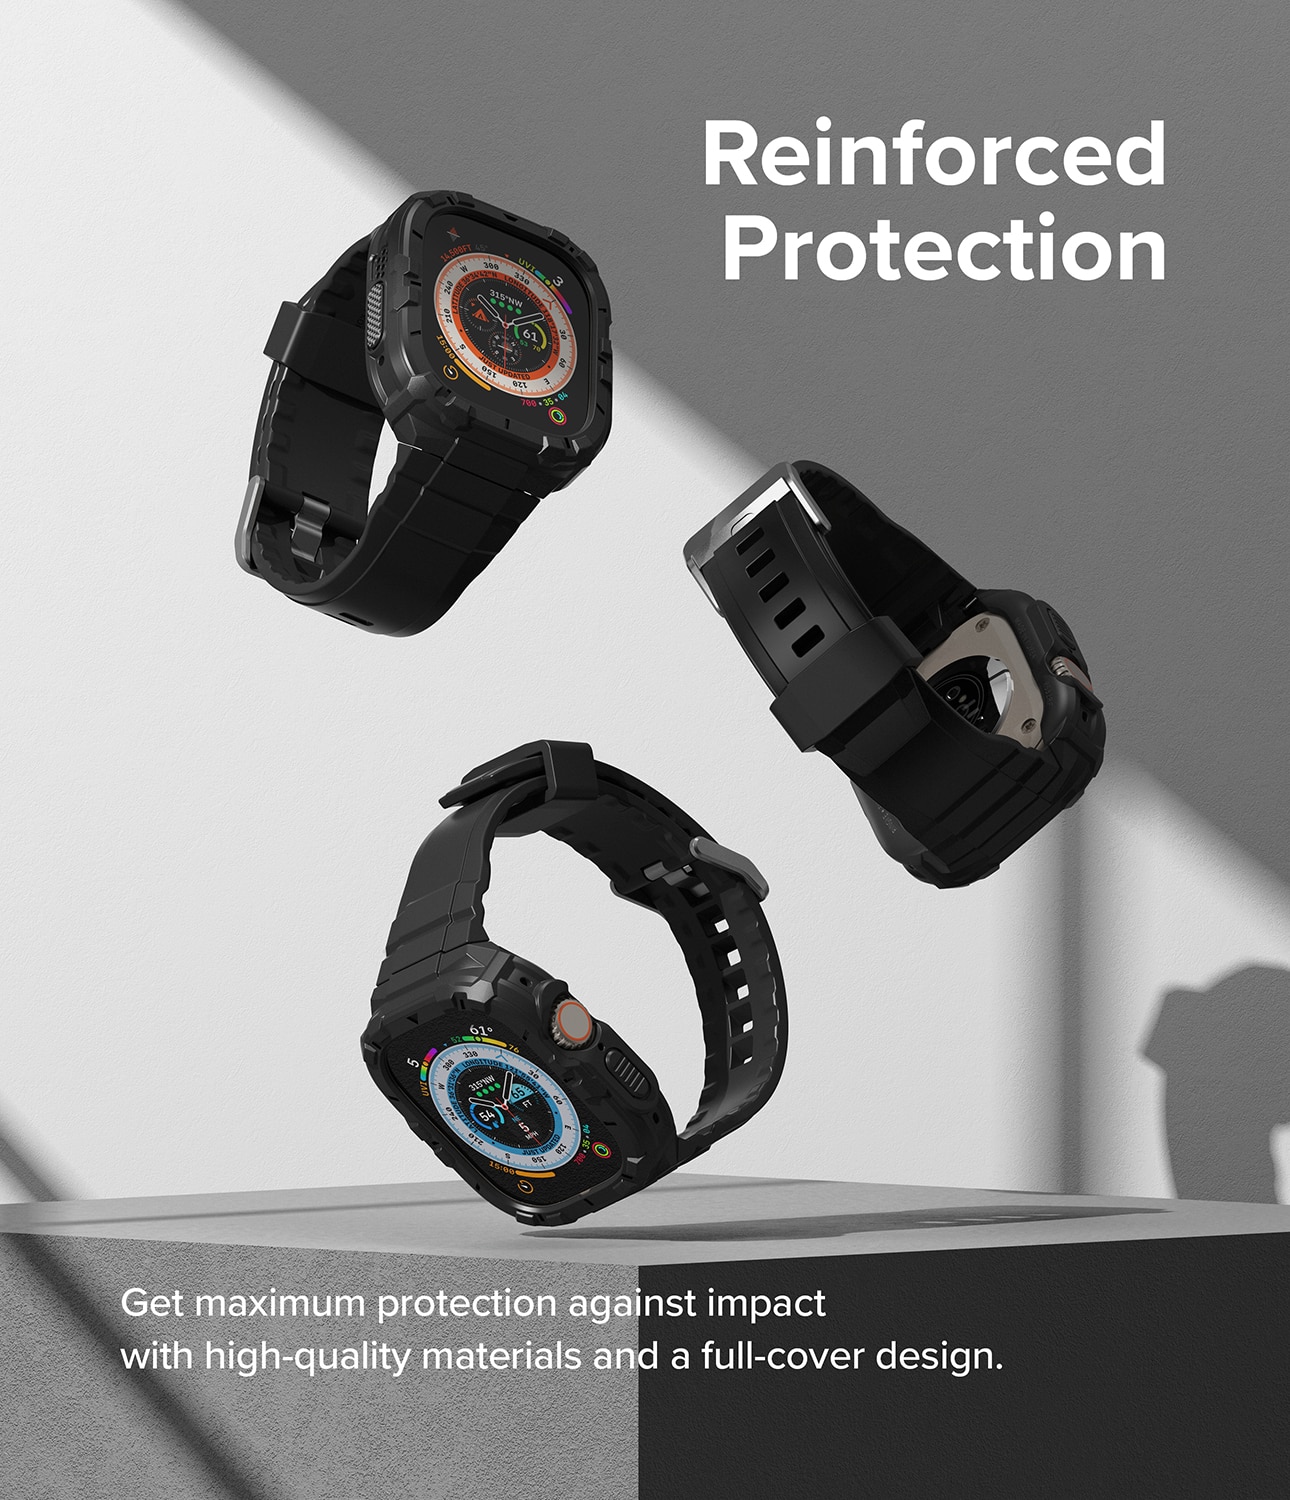 Apple Watch Ultra 49mm Fusion-X Guard Case+Band Black